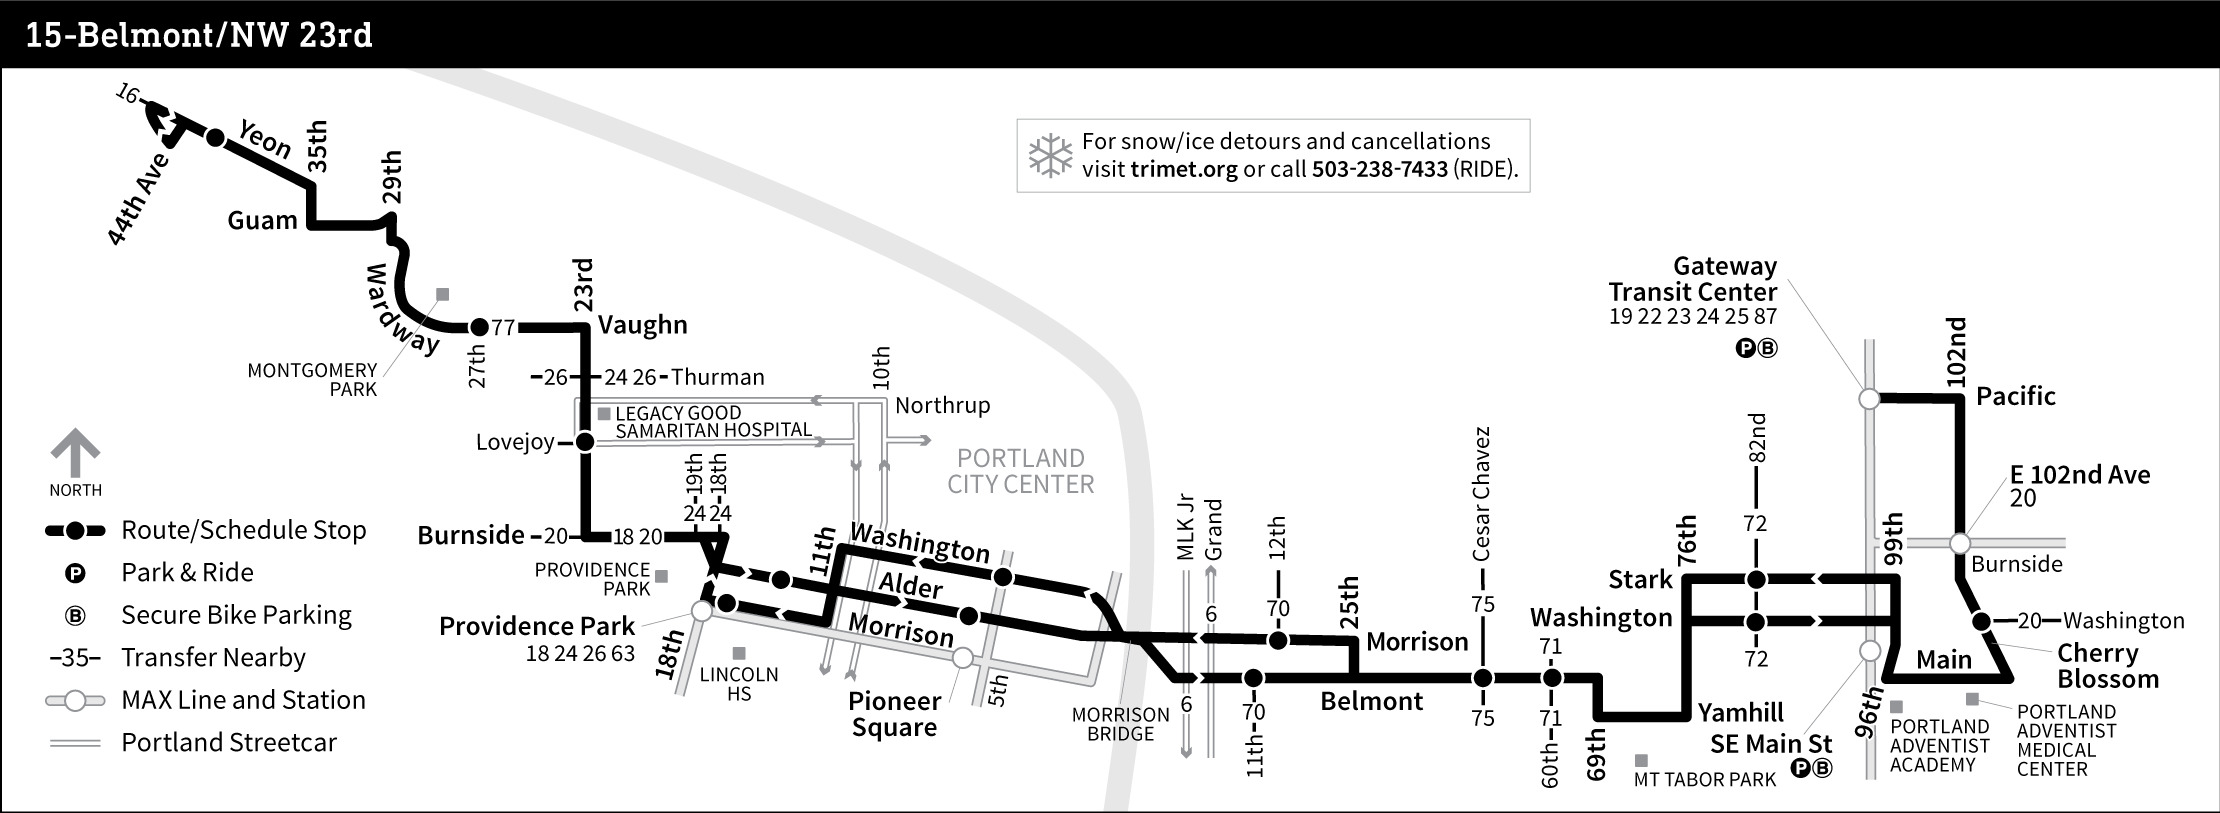 Bus Line 15 route map